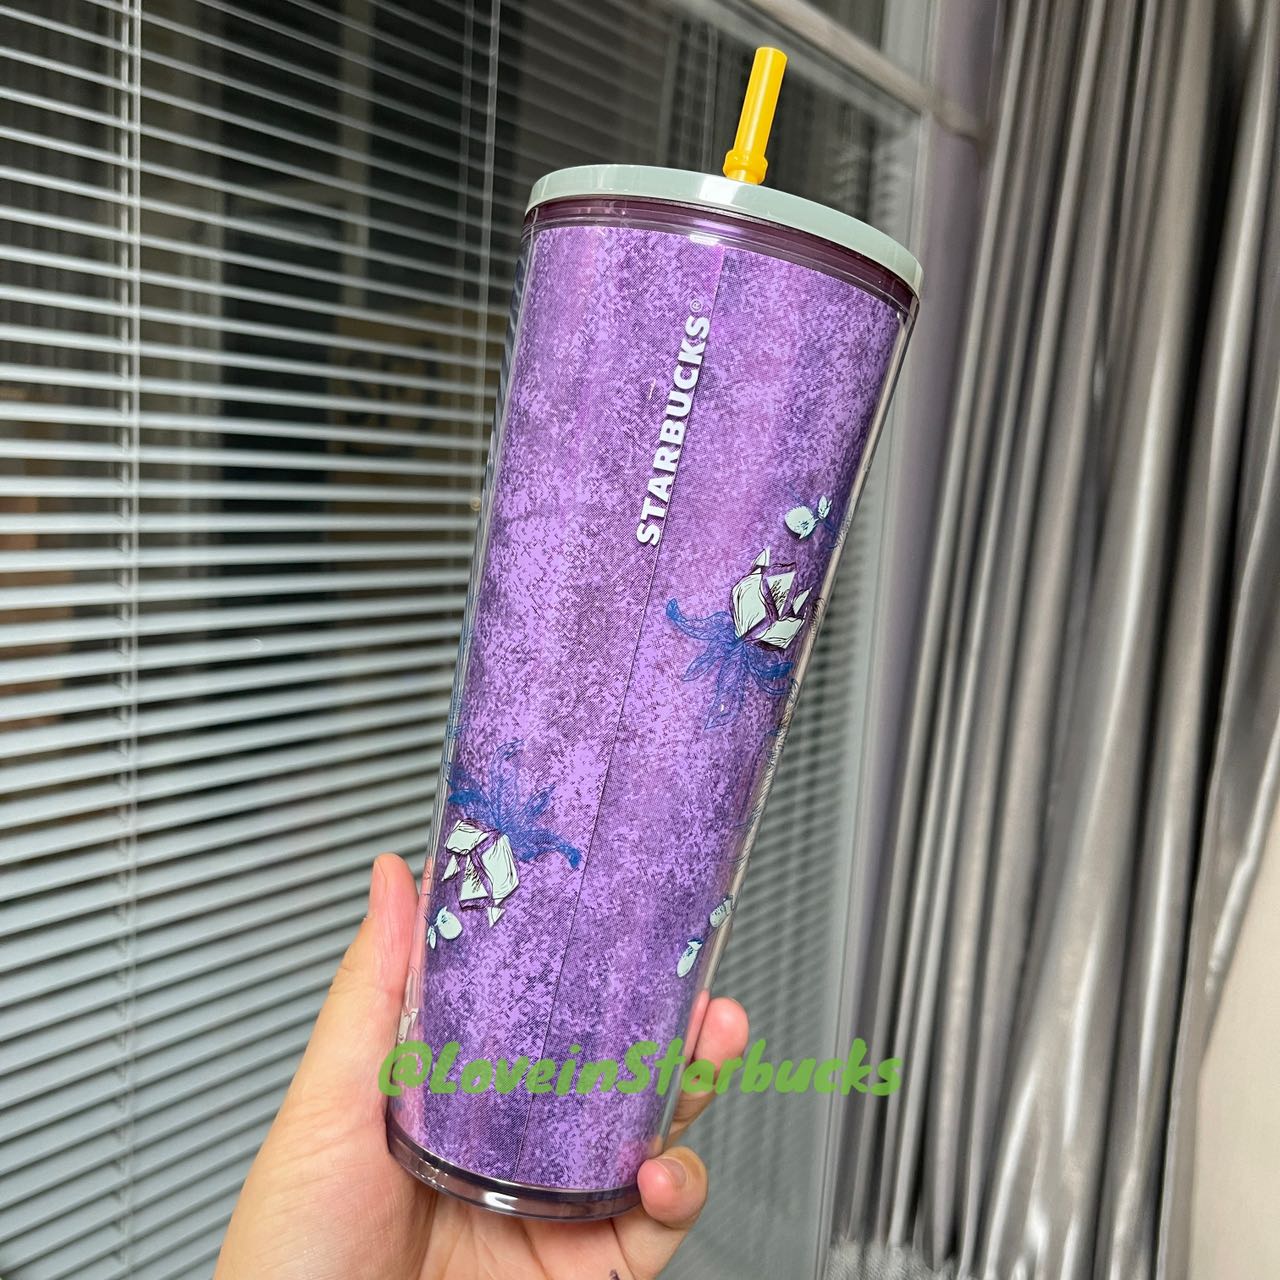 Starbucks purple Venti cup